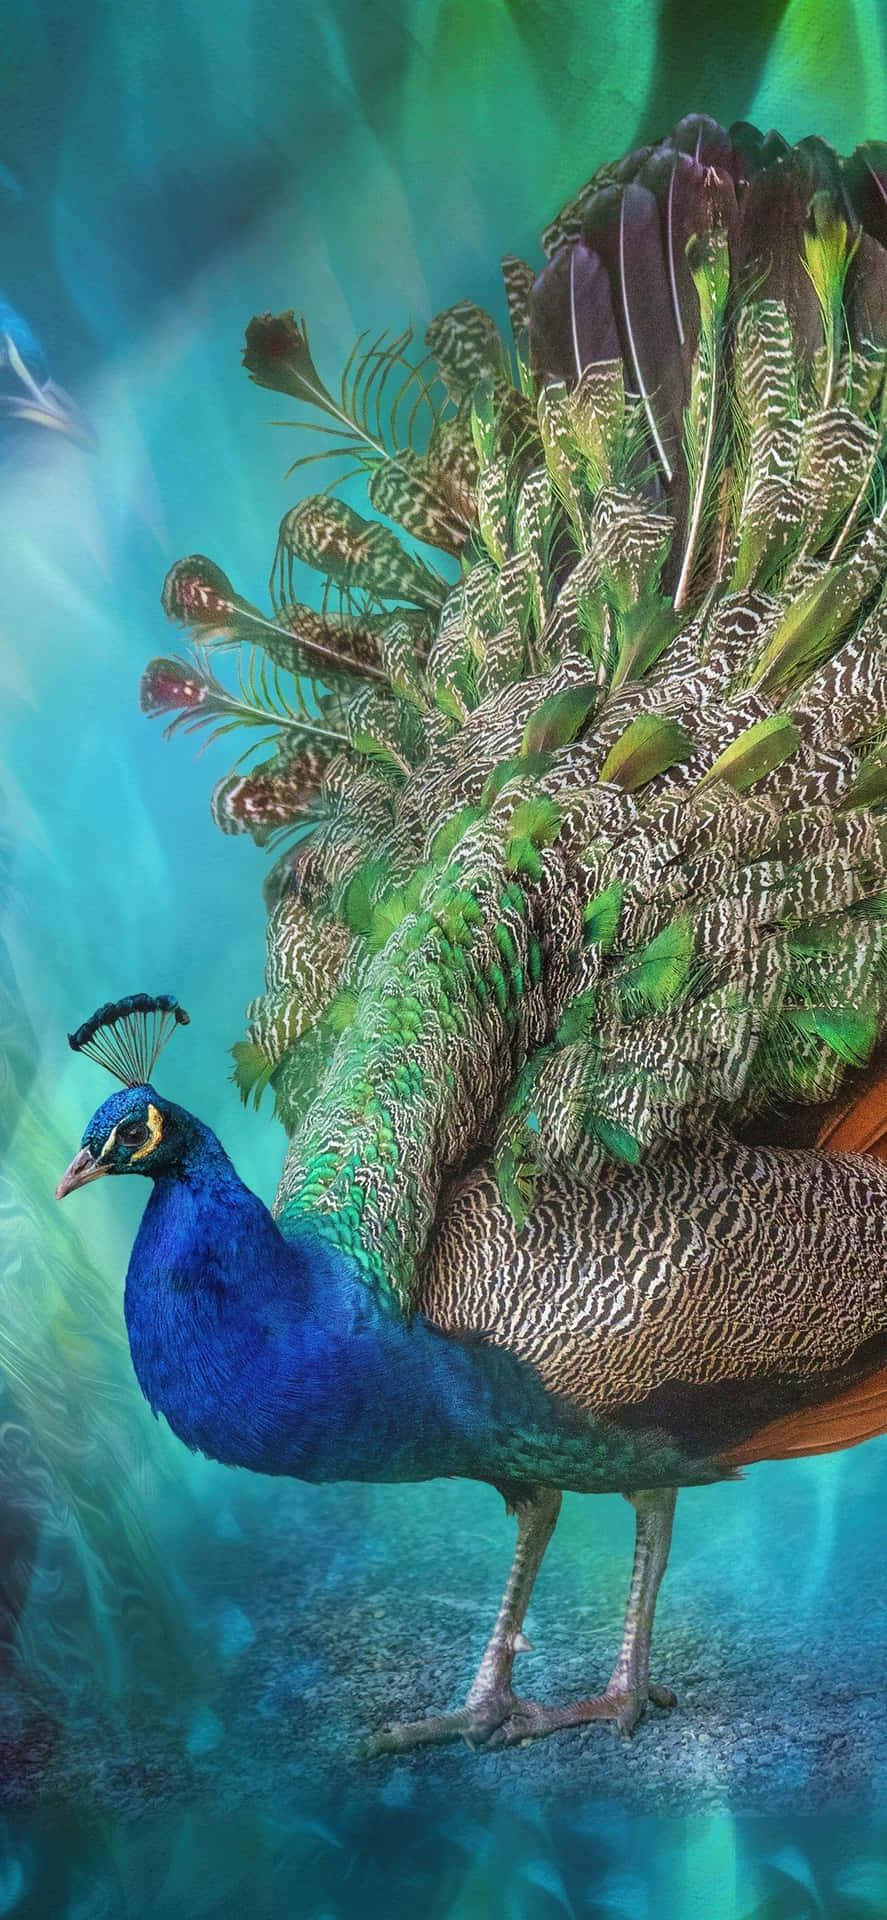 Majestic Peacock Display